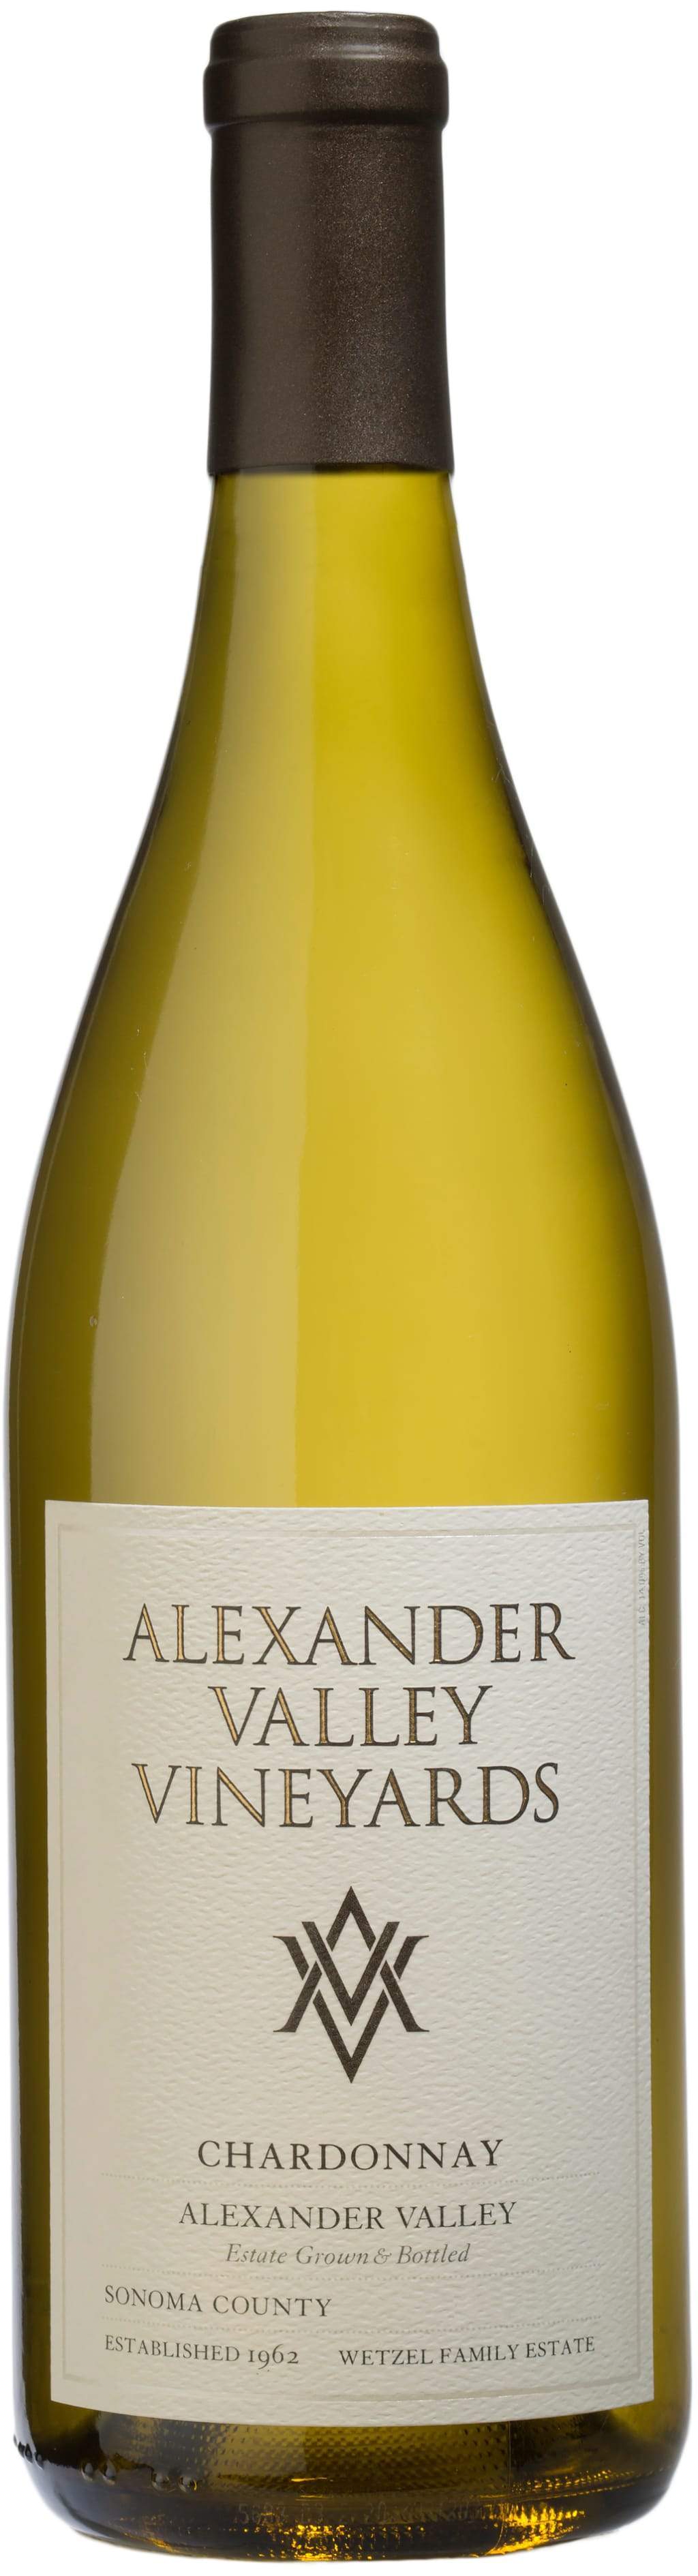 Alexander Valley Vineyards Chardonnay 2018